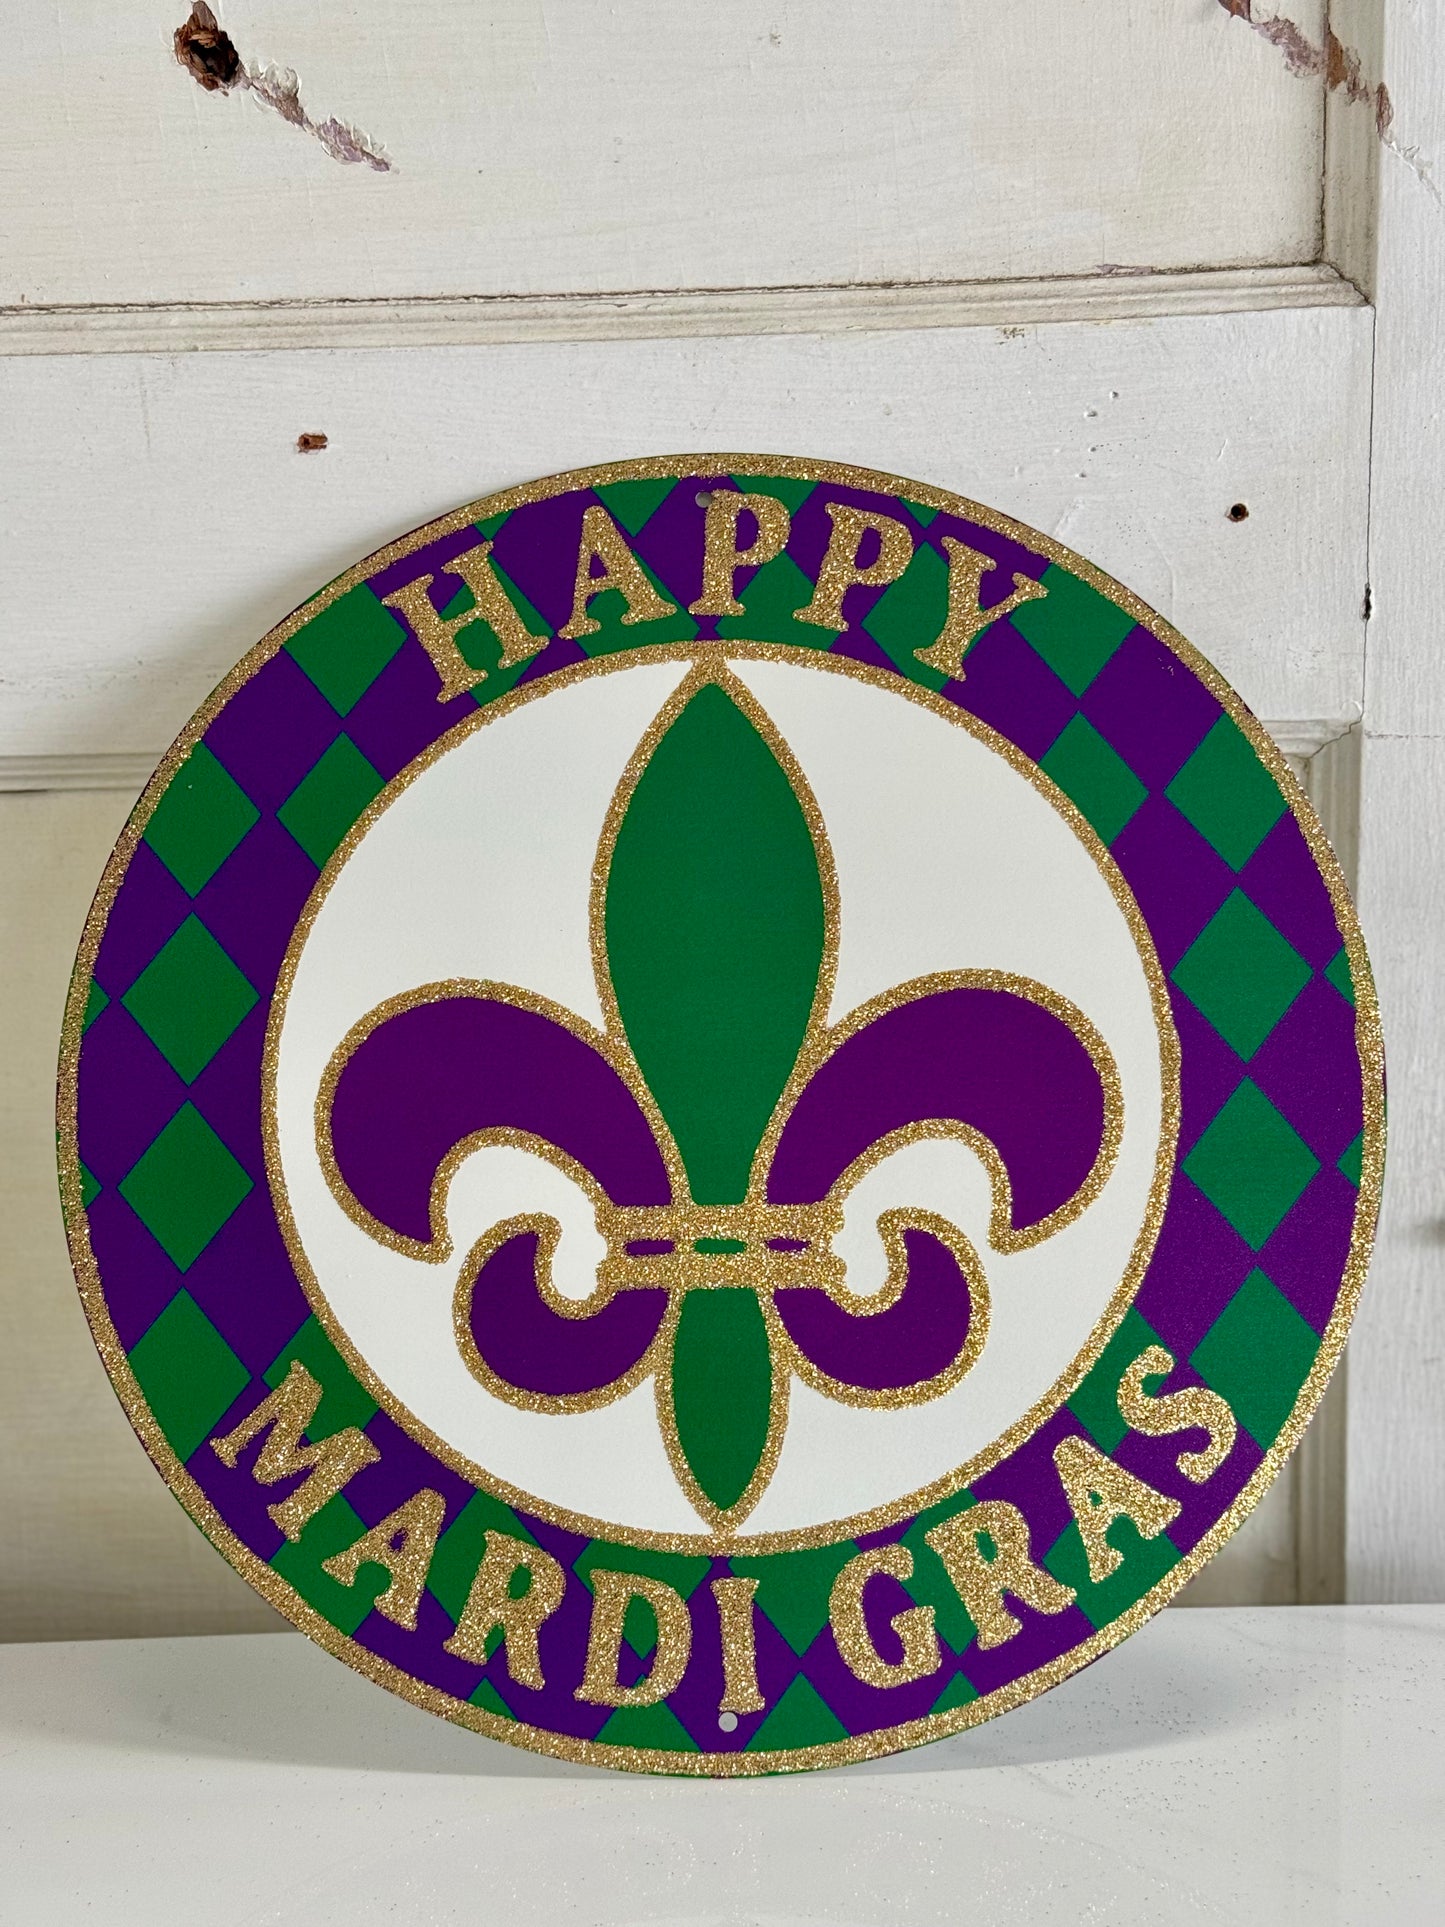 12 Inch Round Metal "Happy Mardi Gras" Sign with Glitter